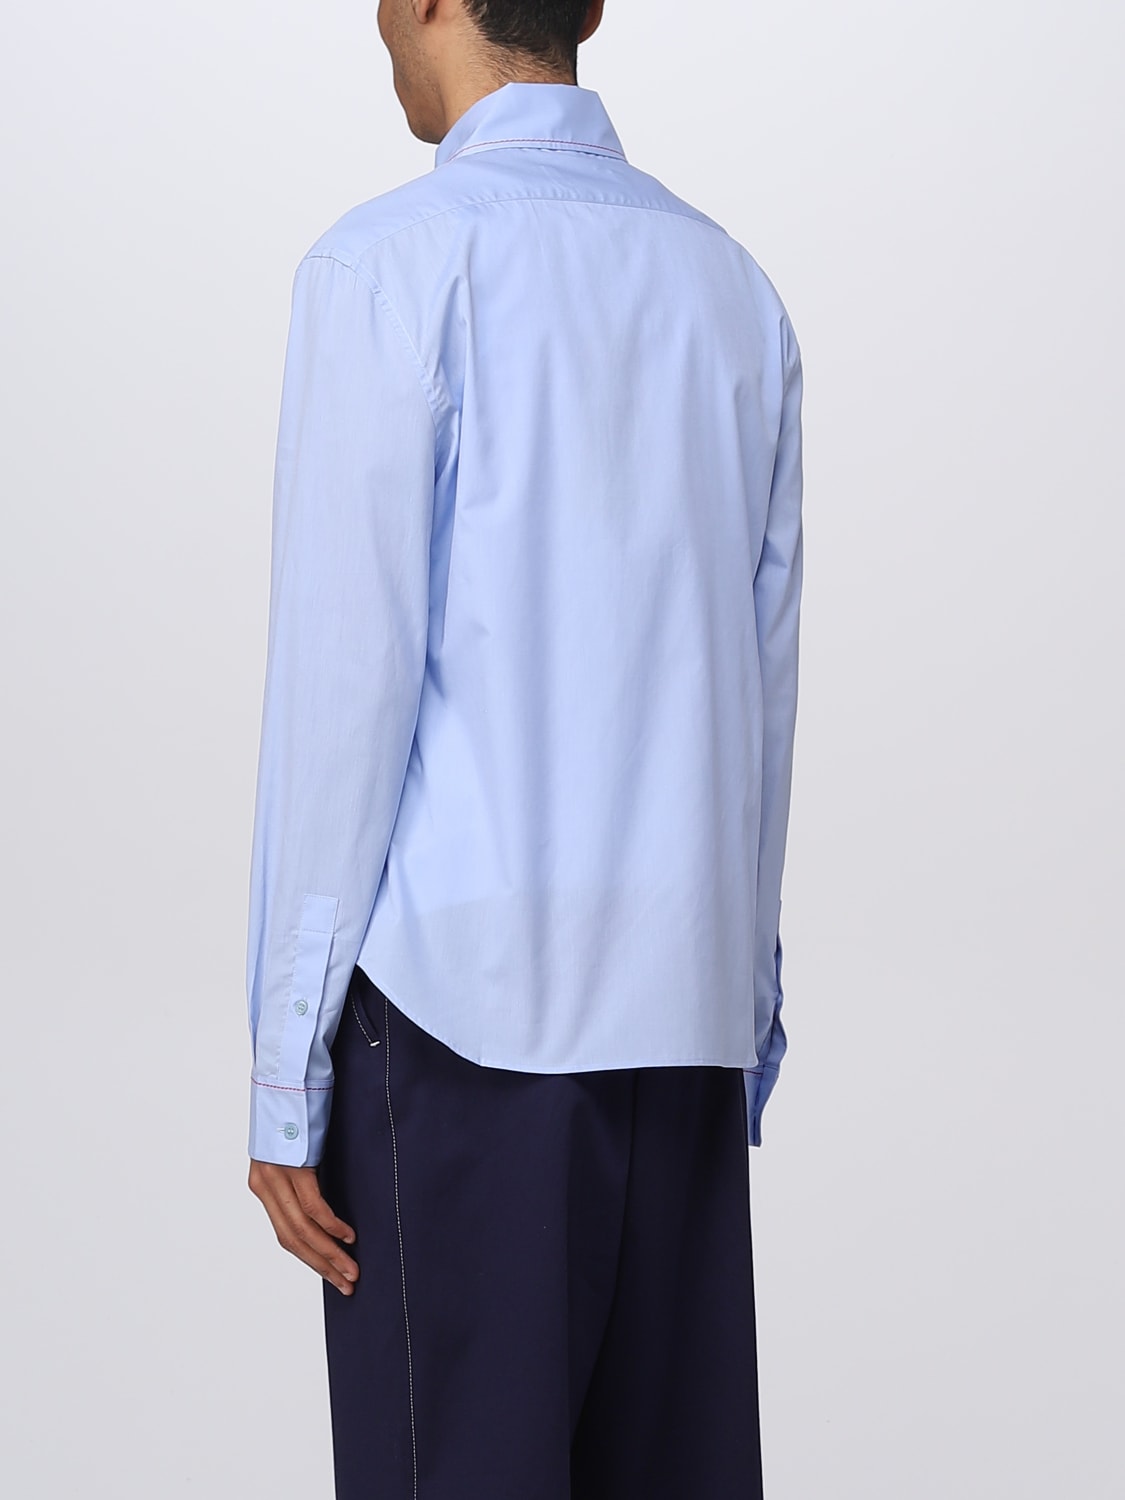 MARNI: shirt for man - Blue | Marni shirt CUMU0267S0UTC193 online on ...